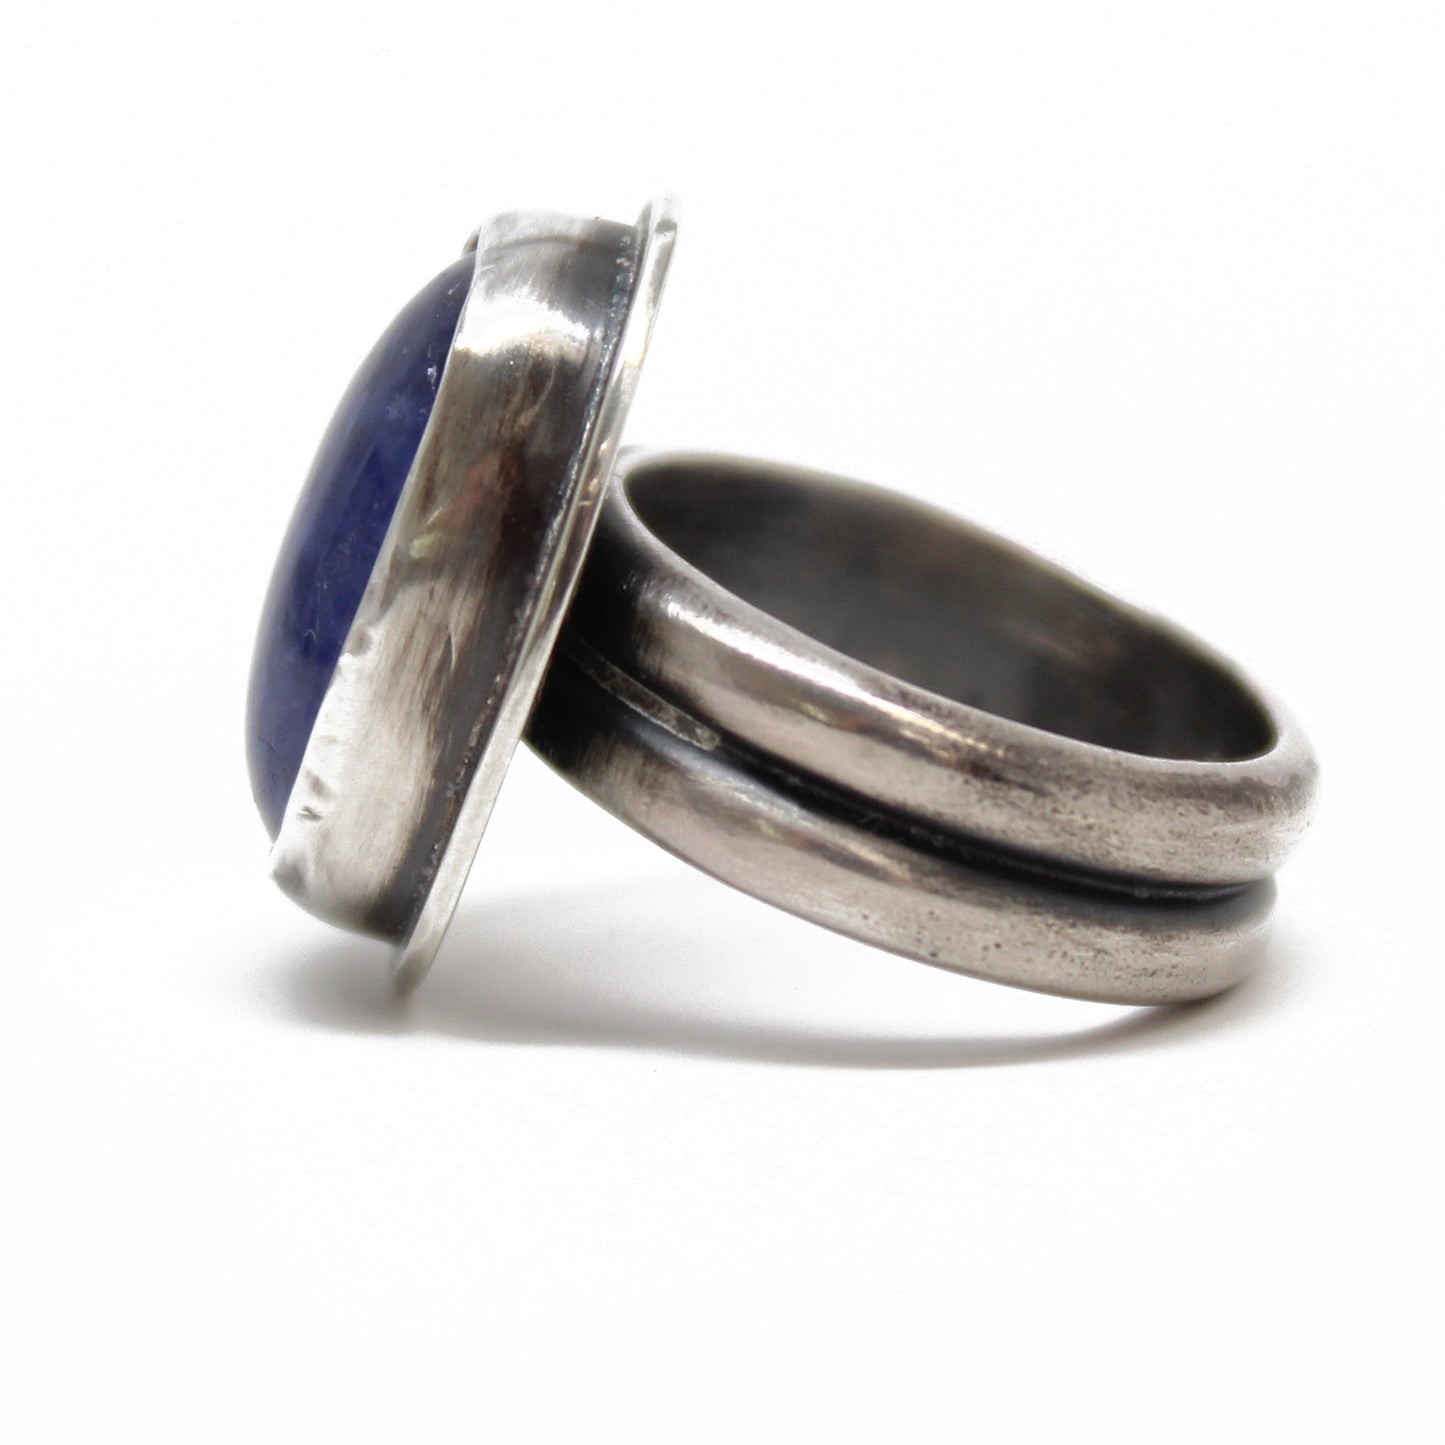 Tanzanite Ring, 7.0 US, Blue Gemstone Statement Ring in Sterling Silver